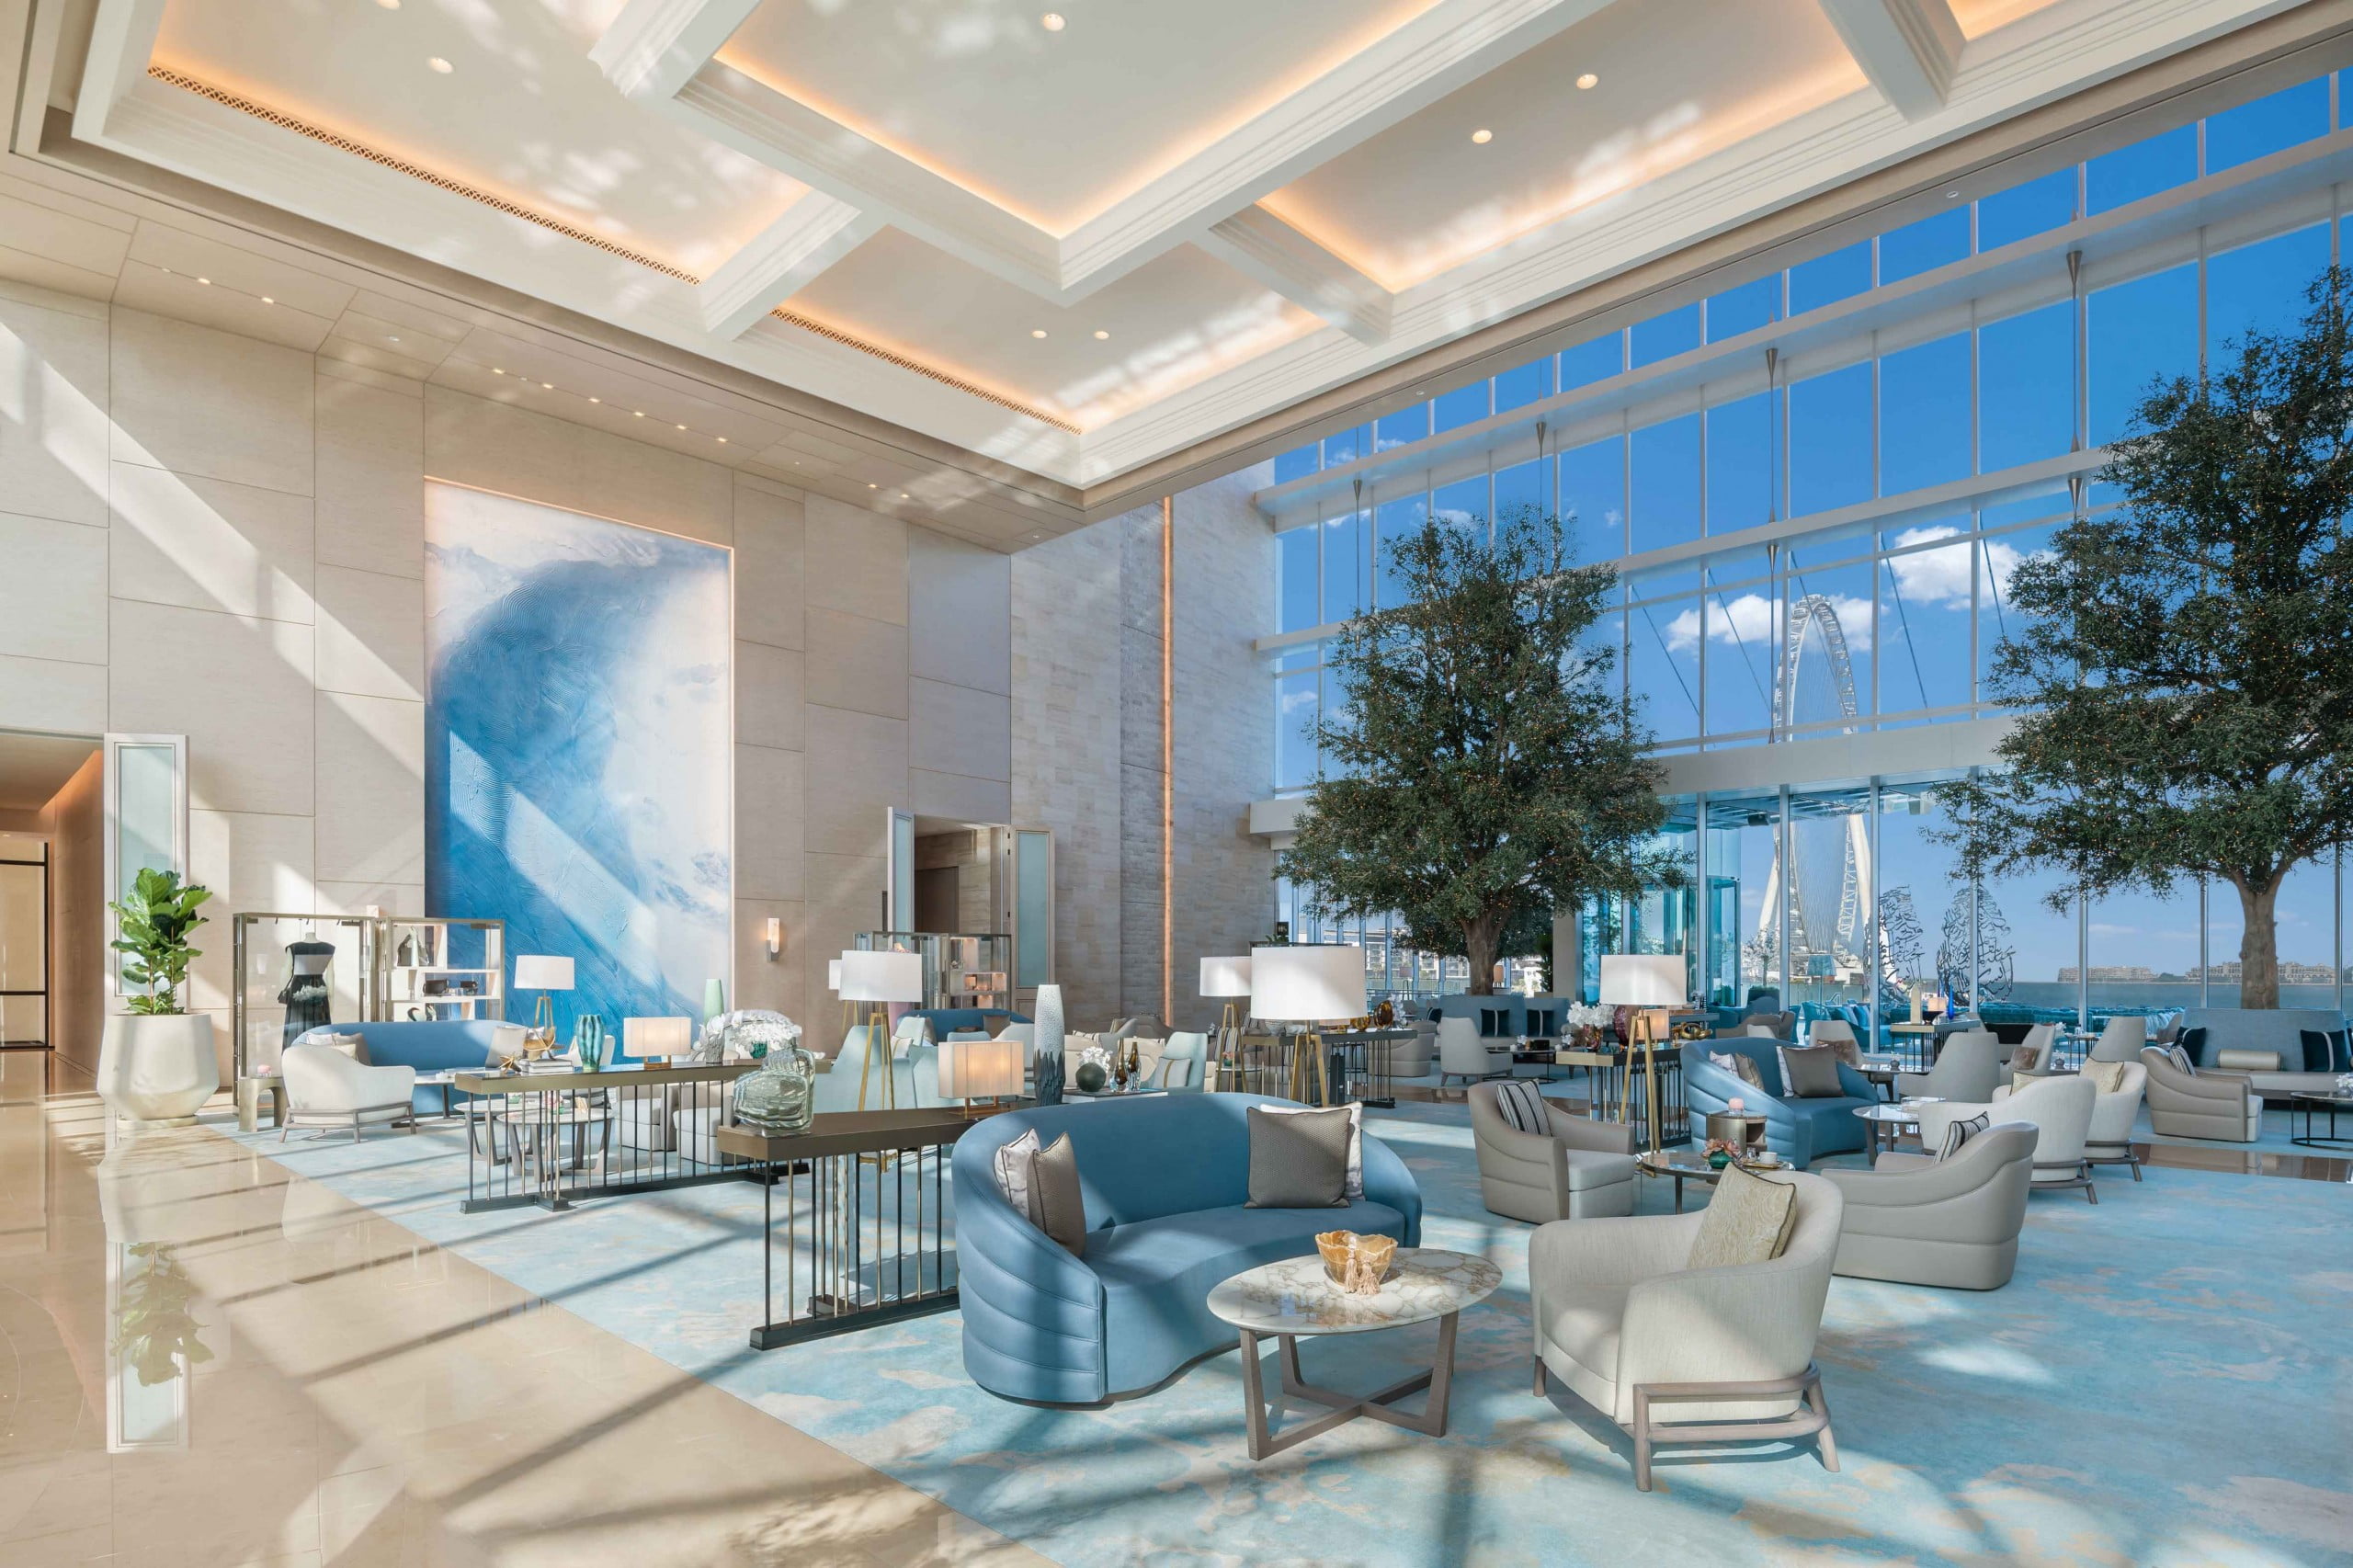 ADBCH Hotel lobby 88 scaled - Immobilier Dubai